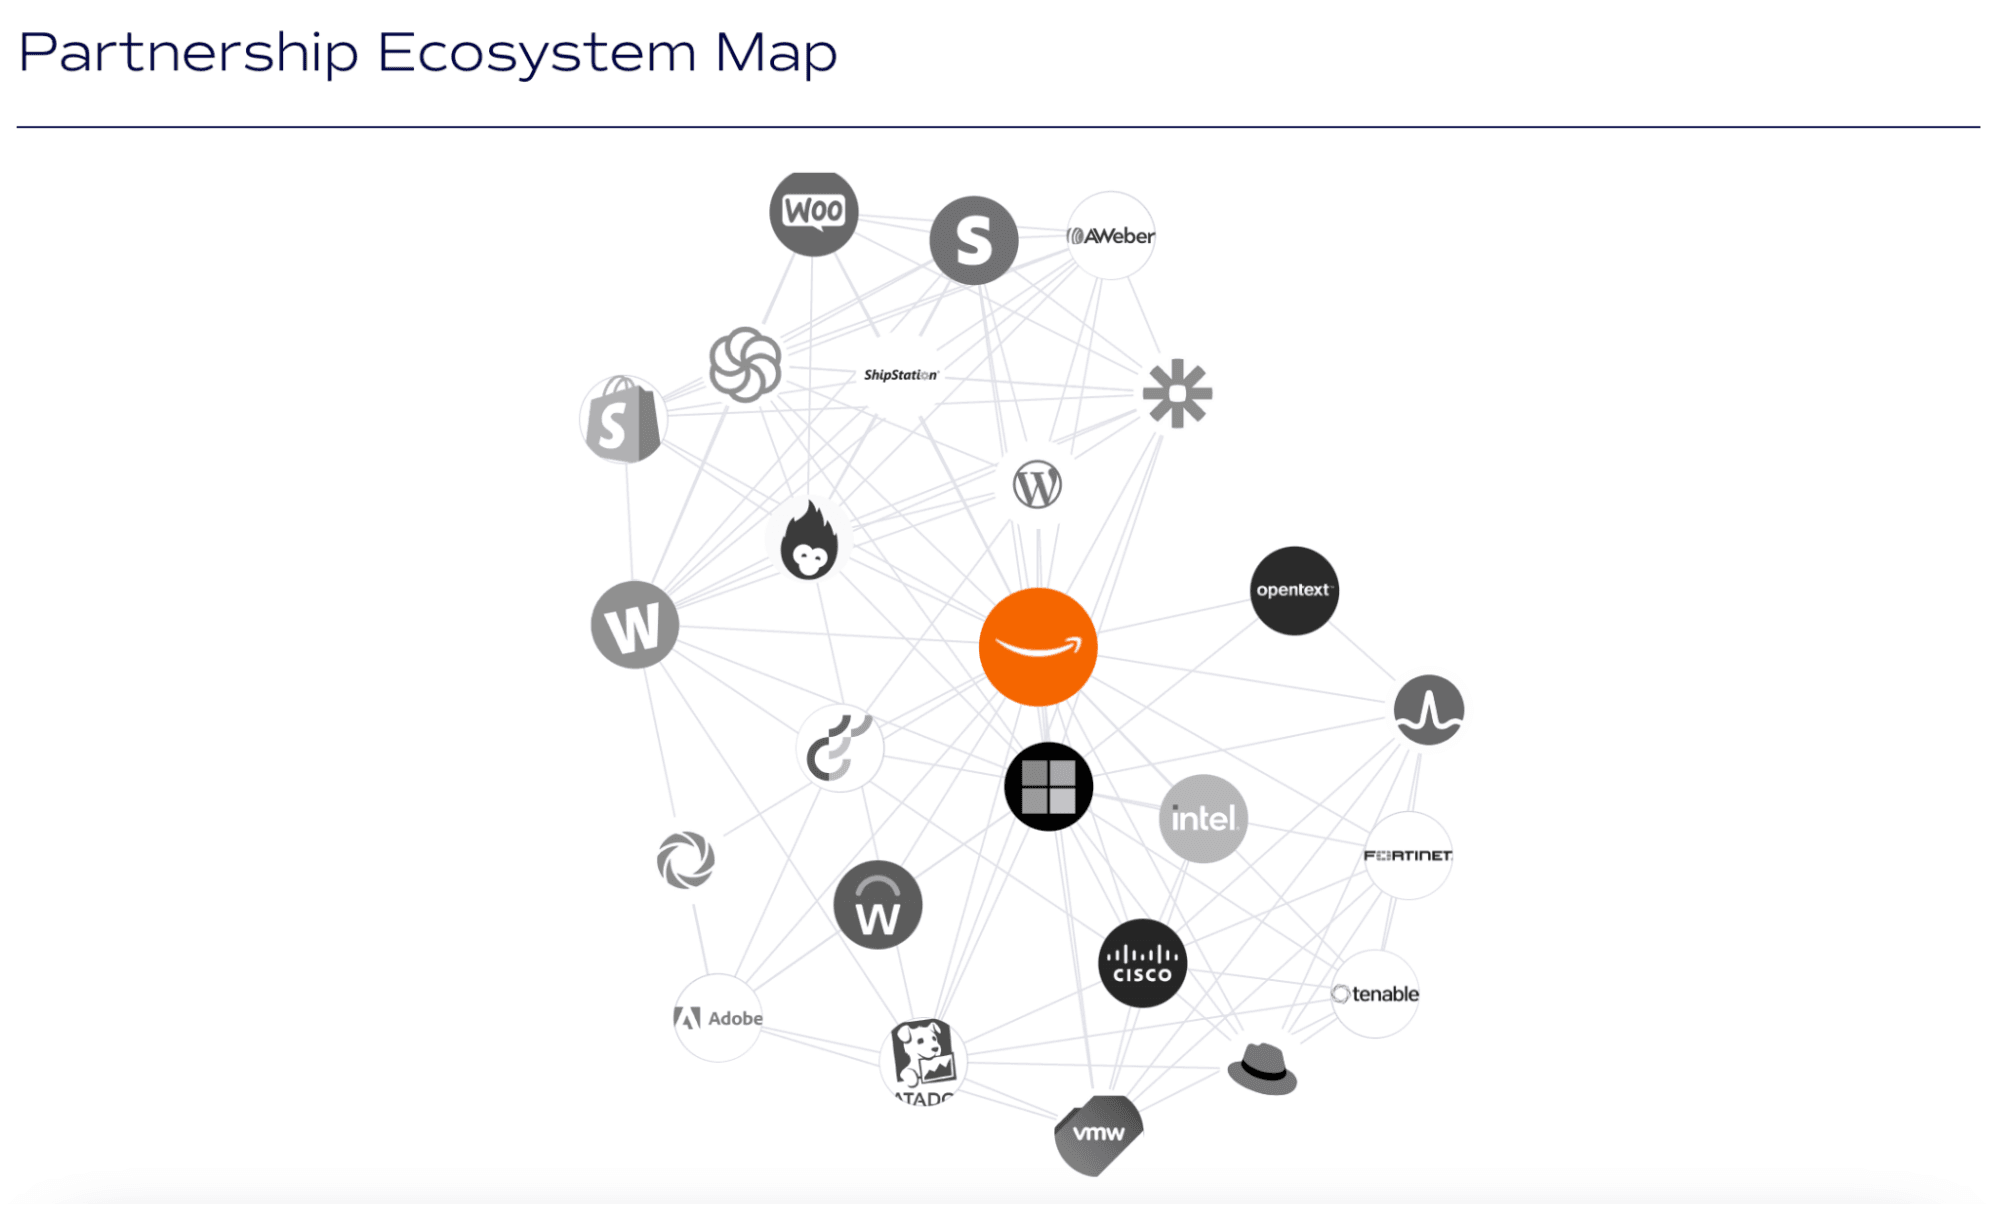 Amazon's Partnership Ecosystem Map—showing all of Amazon's current partnerships